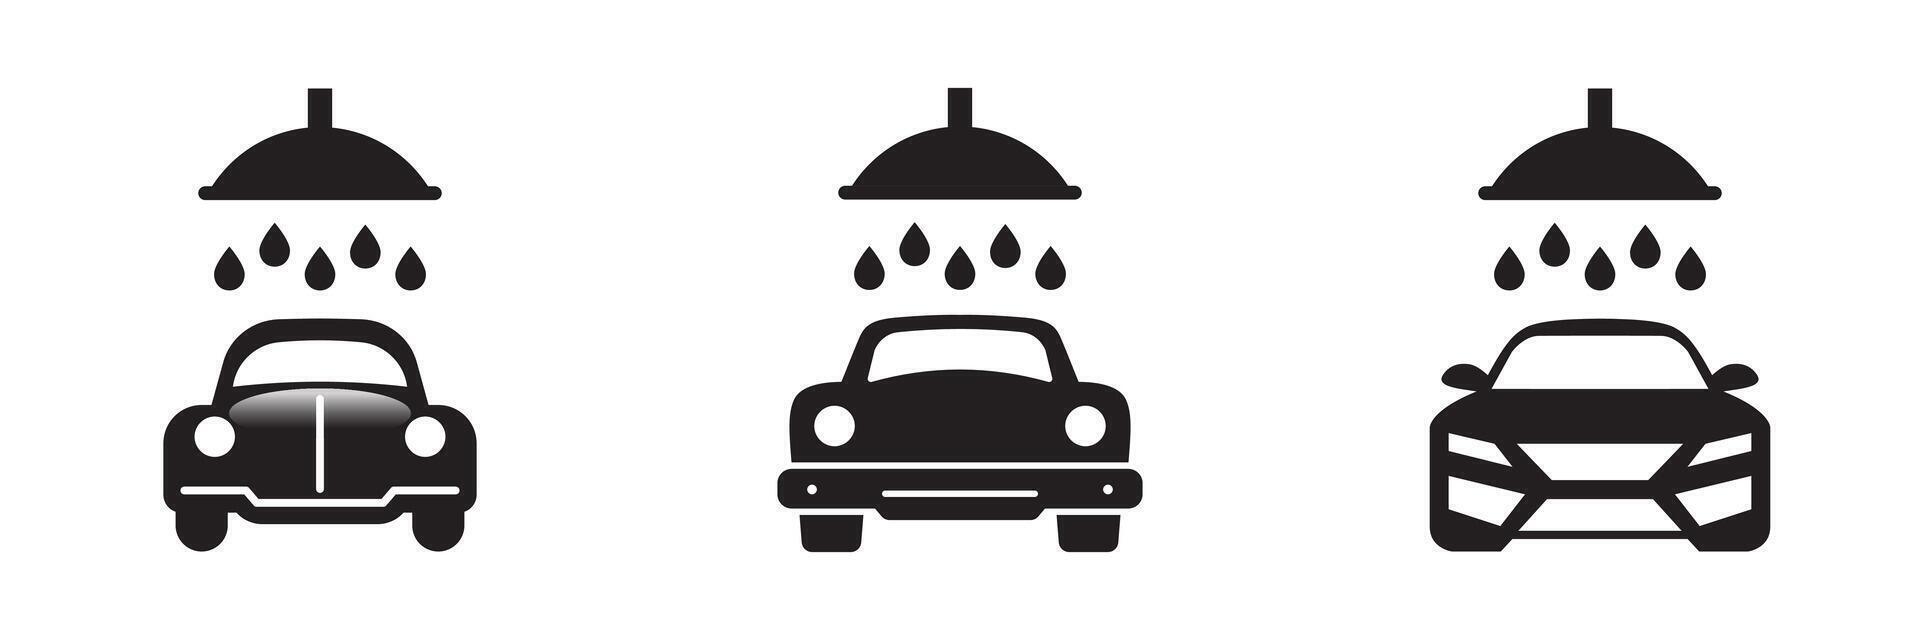 Car washing icon. Vector illustration.